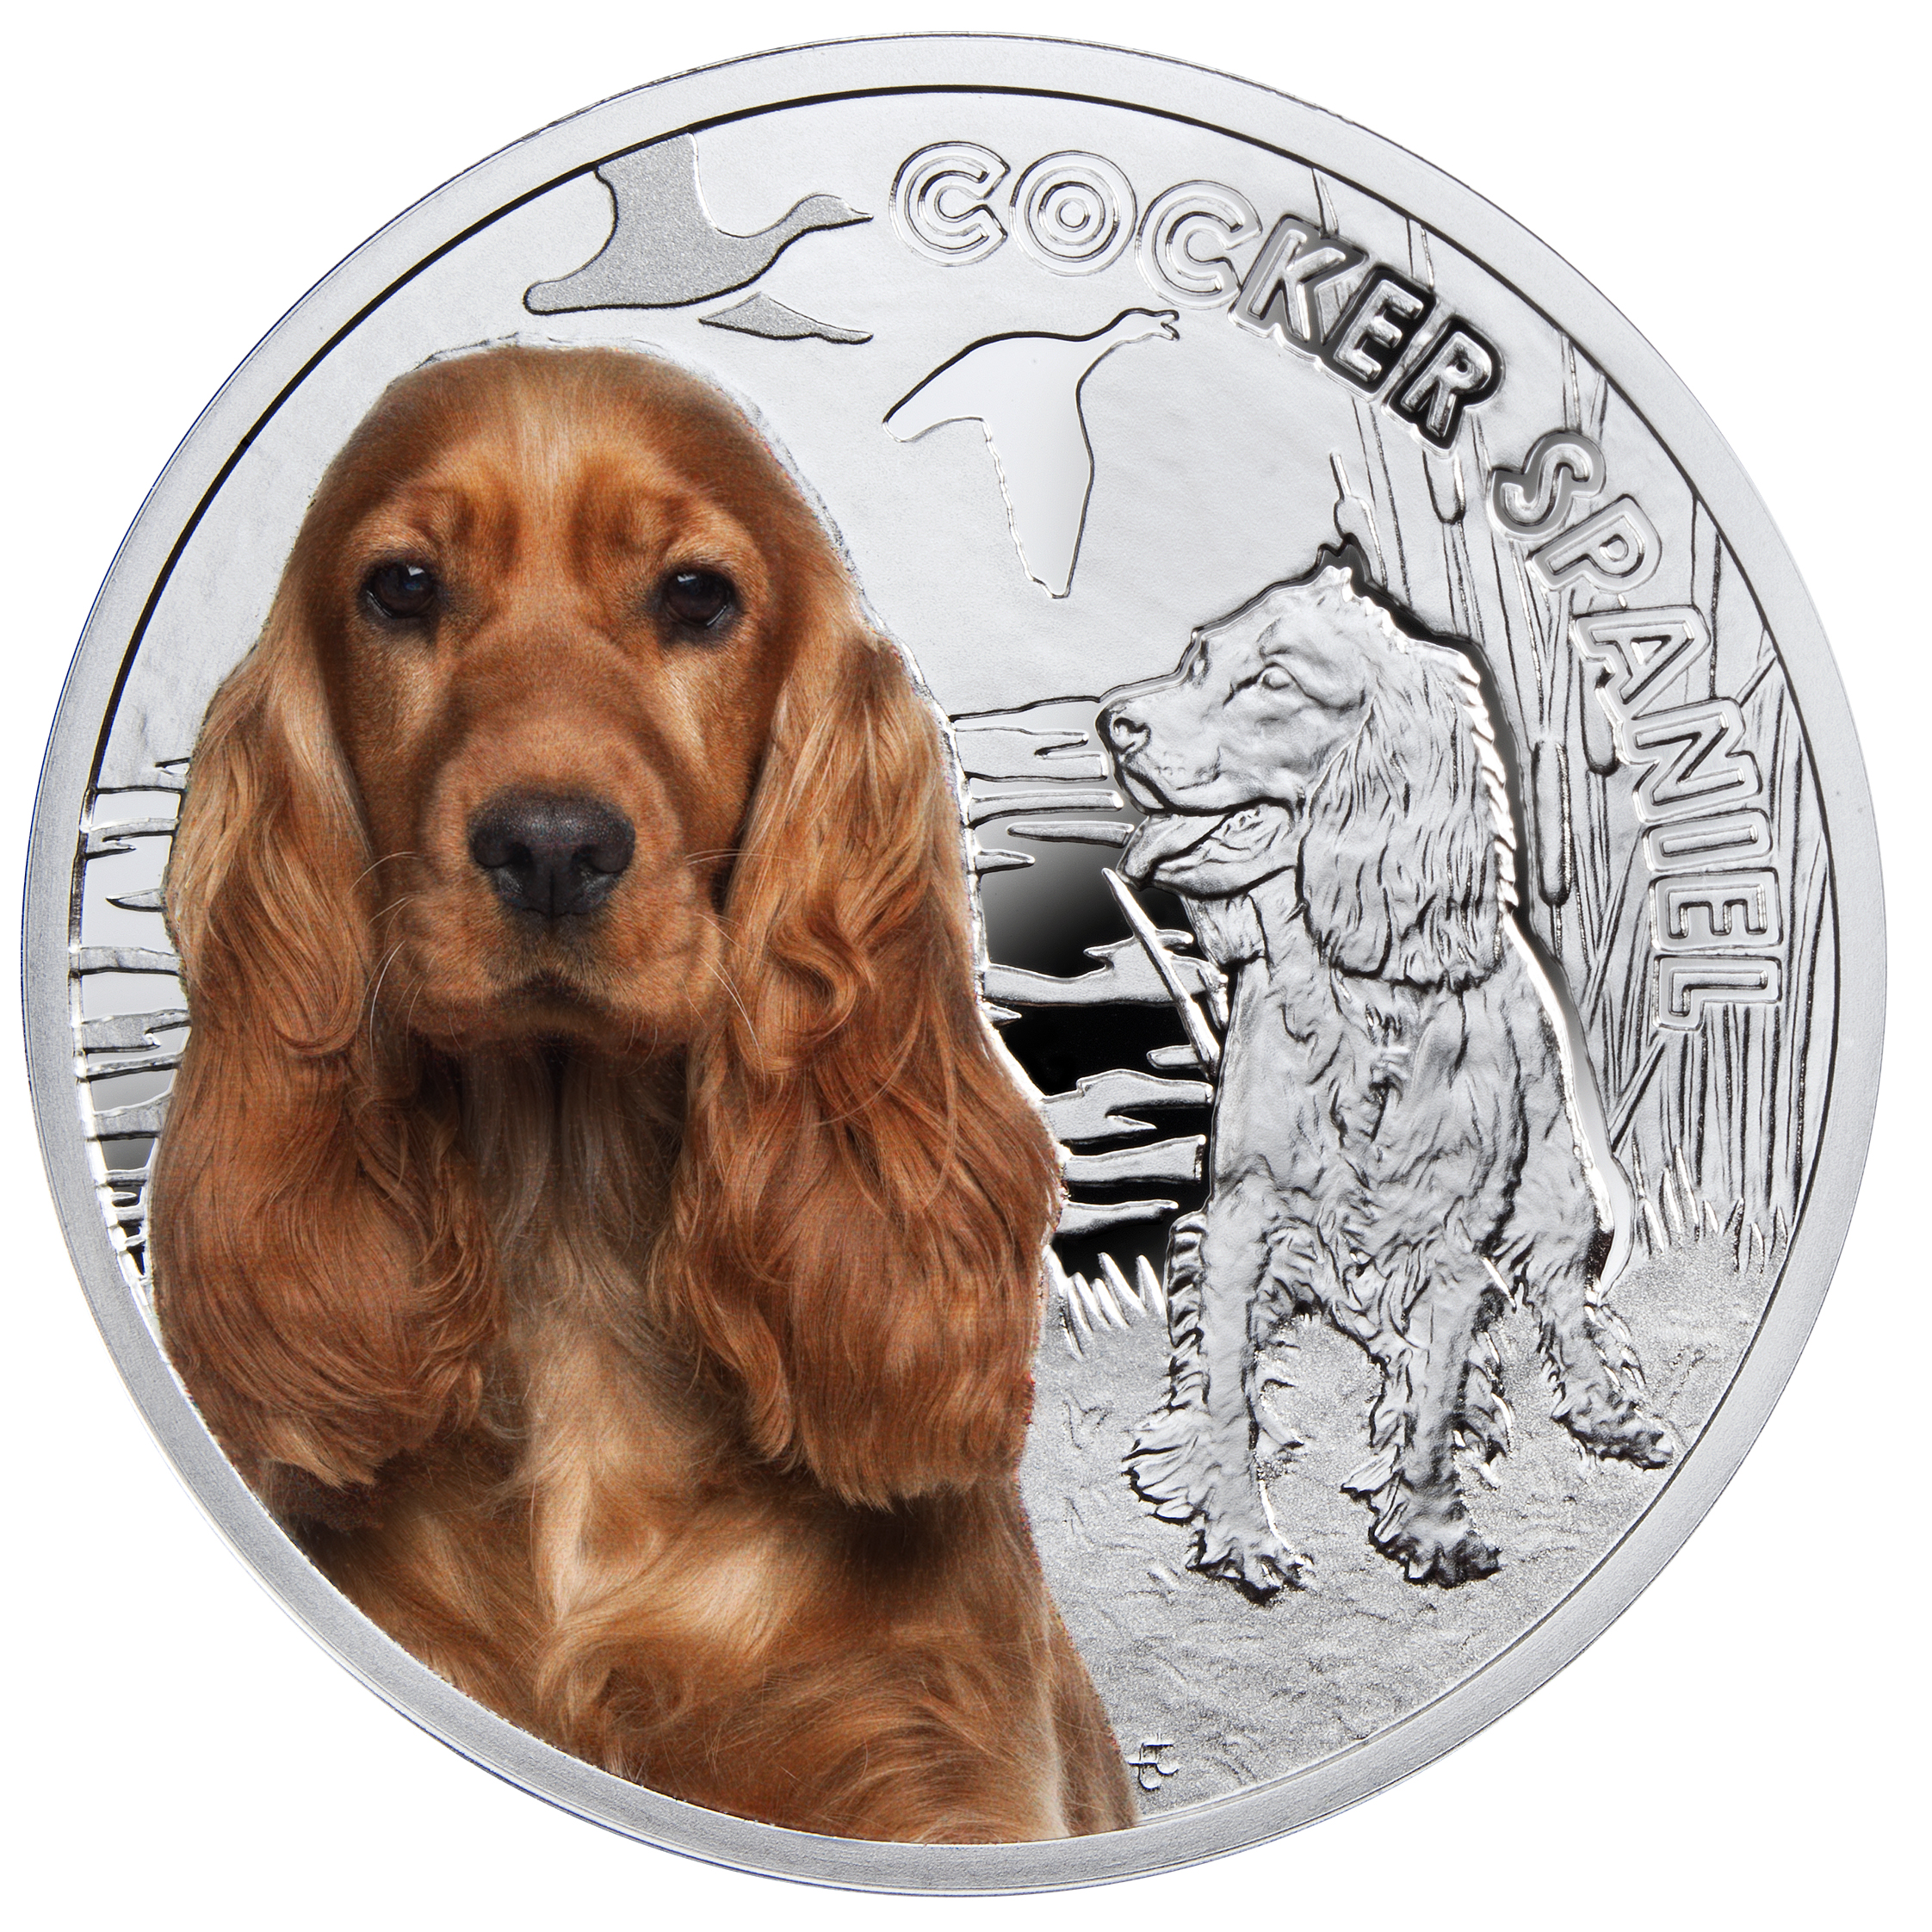 Bendog монета. Монета спаниель. Монеты собакам спаниель. Монета с цветной собакой. Серебряная монета собака.